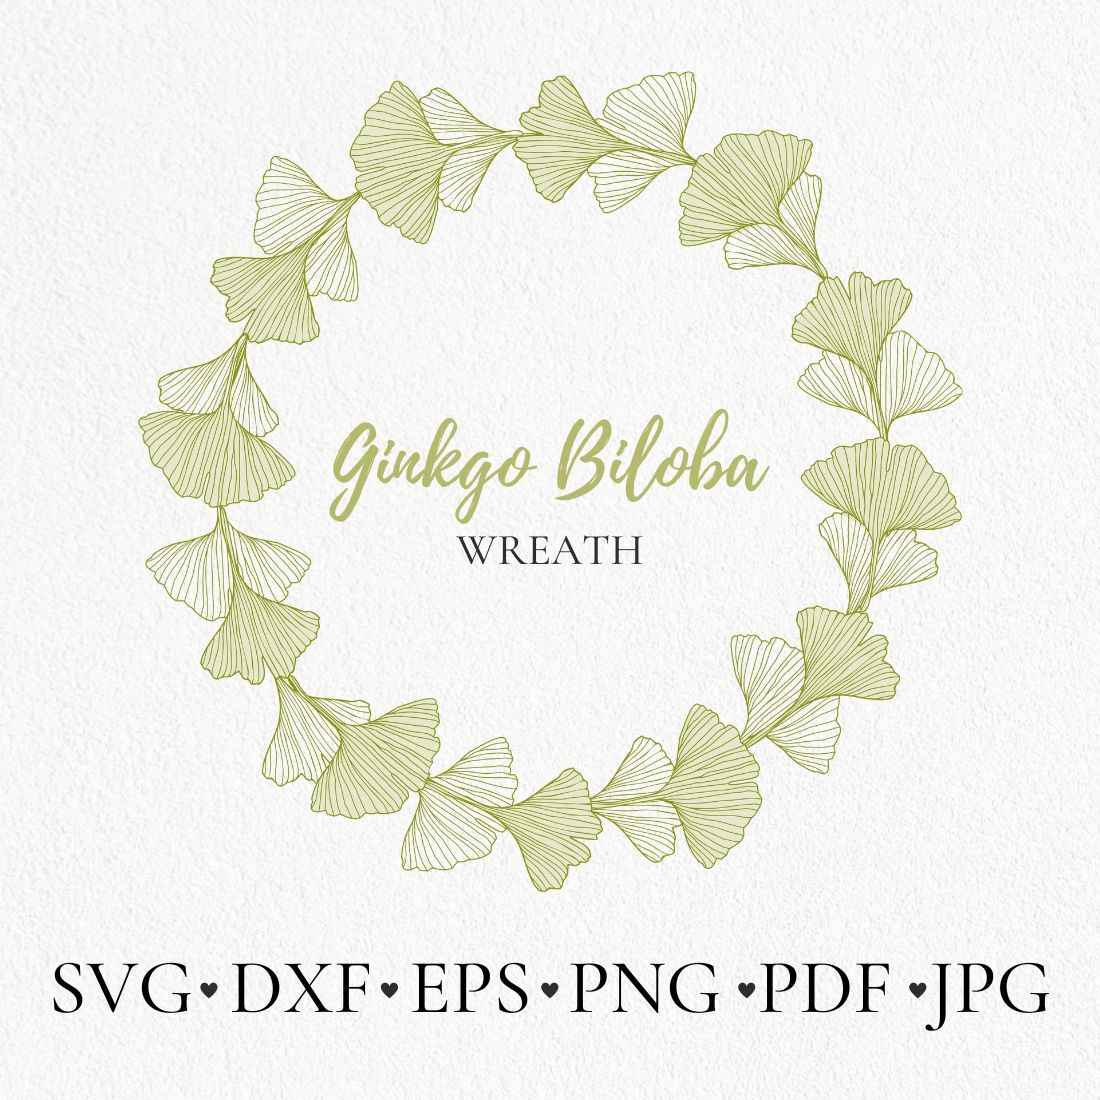 Ginkgo biloba frame svg cut file circle floral wreath frame png 300 dpi wedding floral leaves for invitations or card cover image.